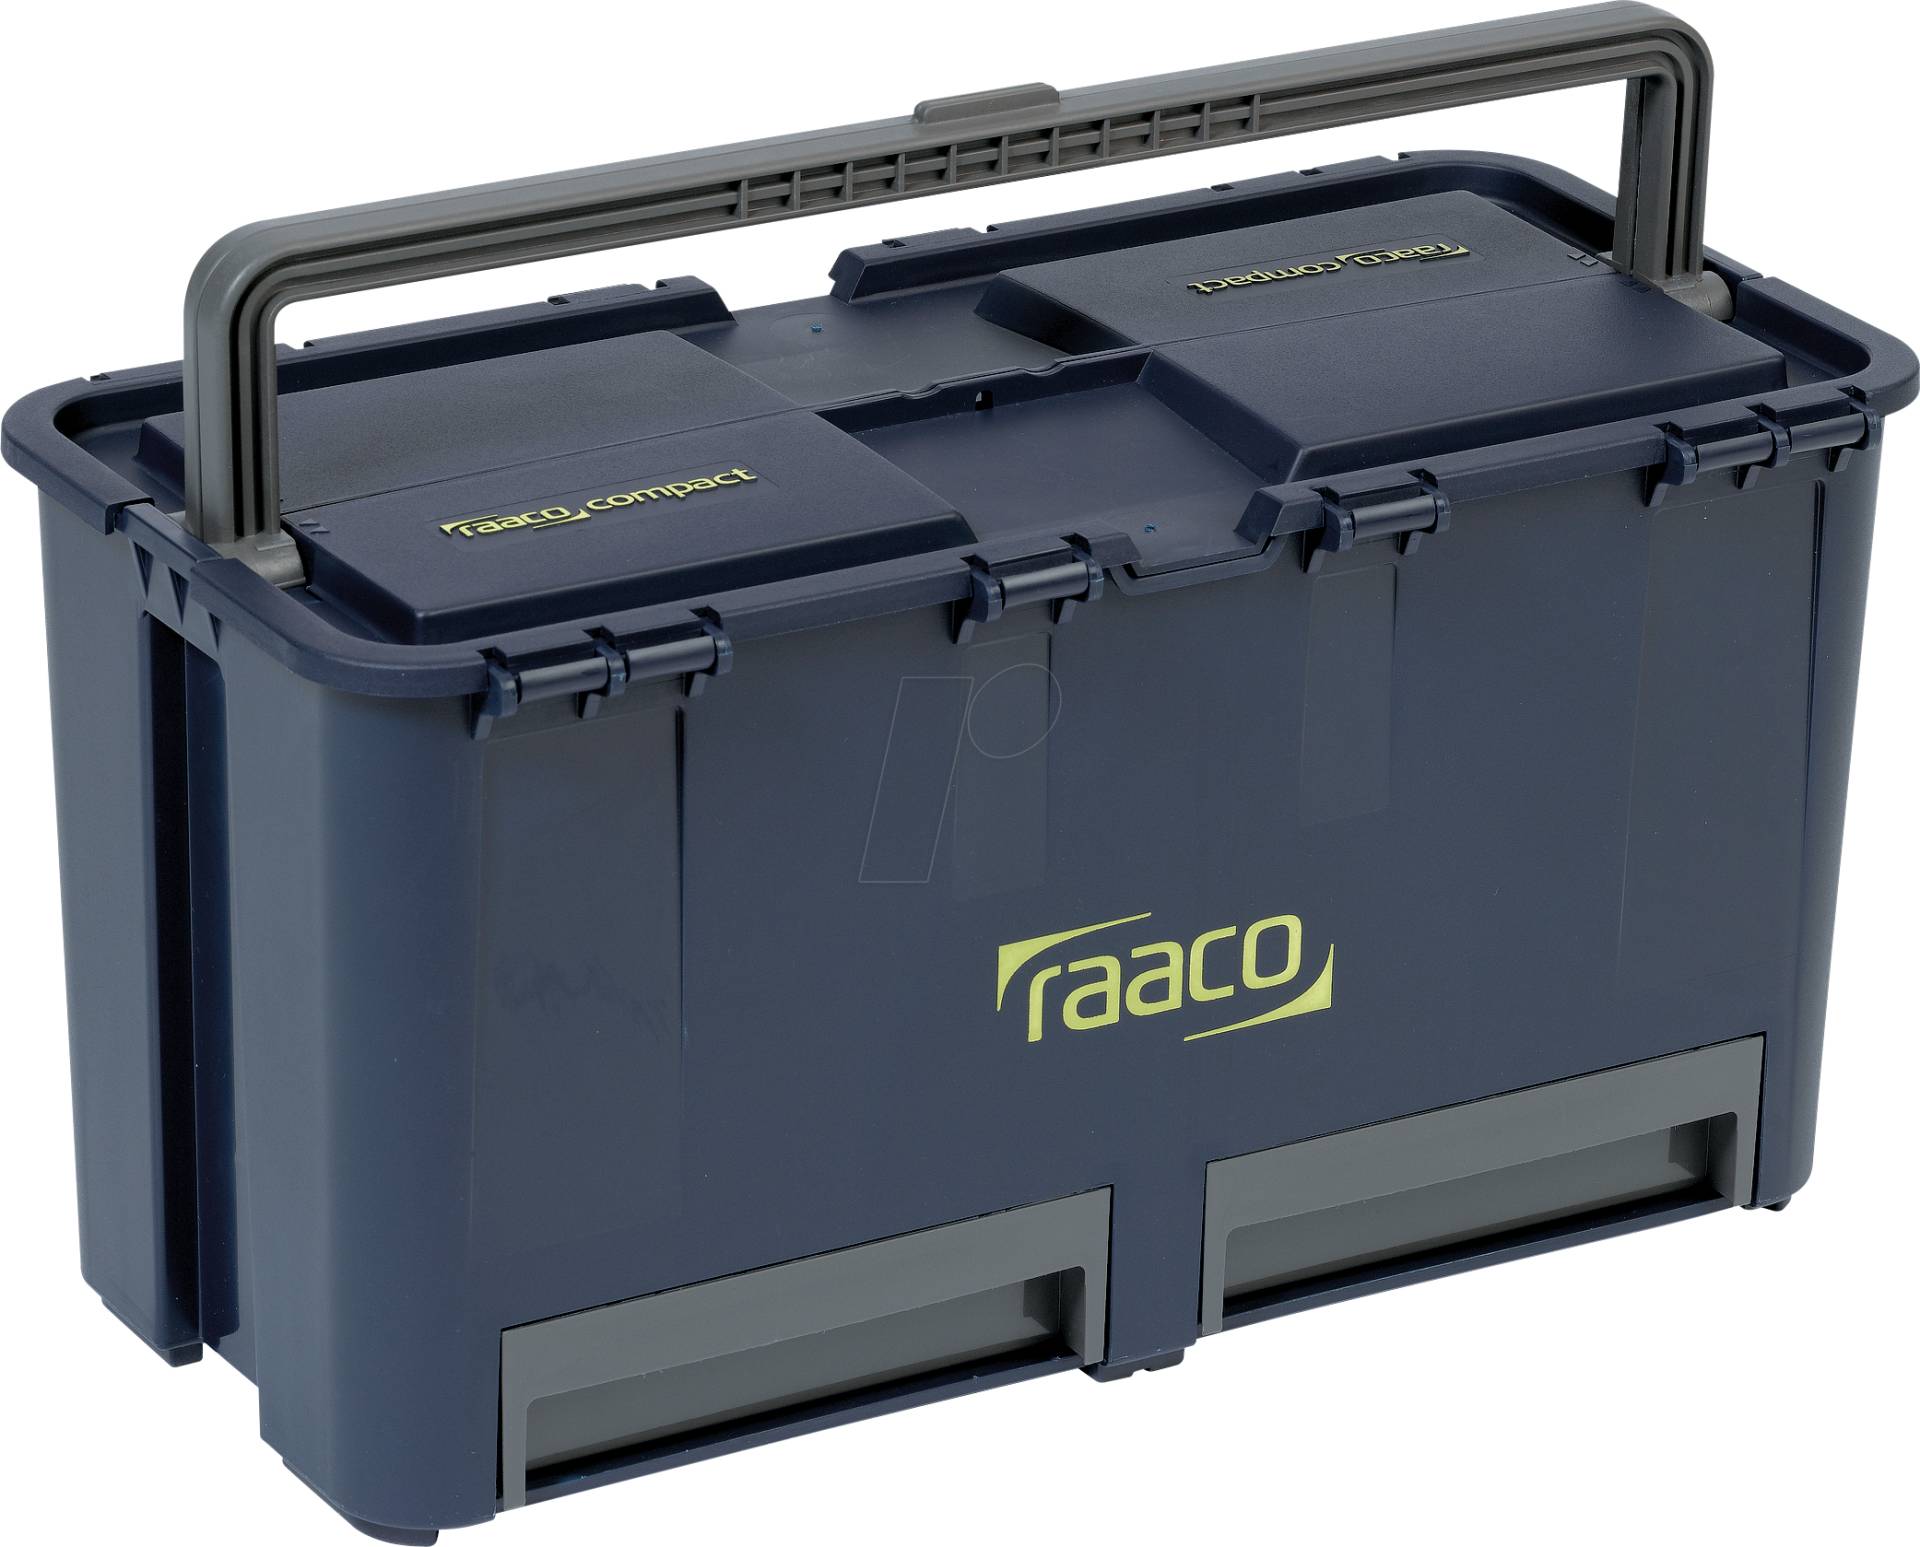 RAACO 136587 - Compact 27 von raaco